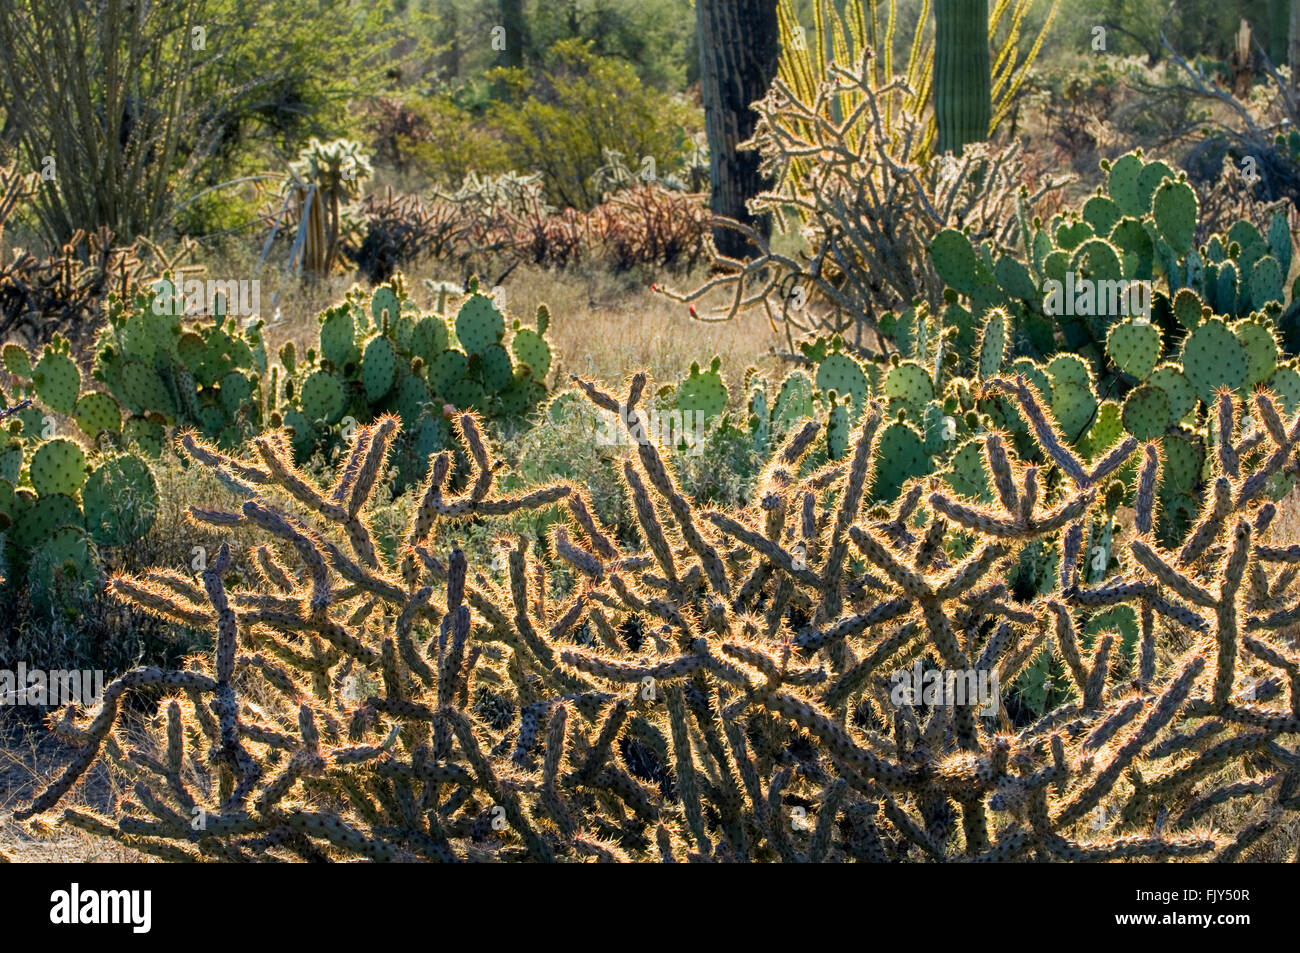 La Staghorn cholla (Opuntia versicolor) e Engelmann il fico d'India (Opuntia engelmannii) cactus, deserto Sonoran, Arizona, Stati Uniti d'America Foto Stock